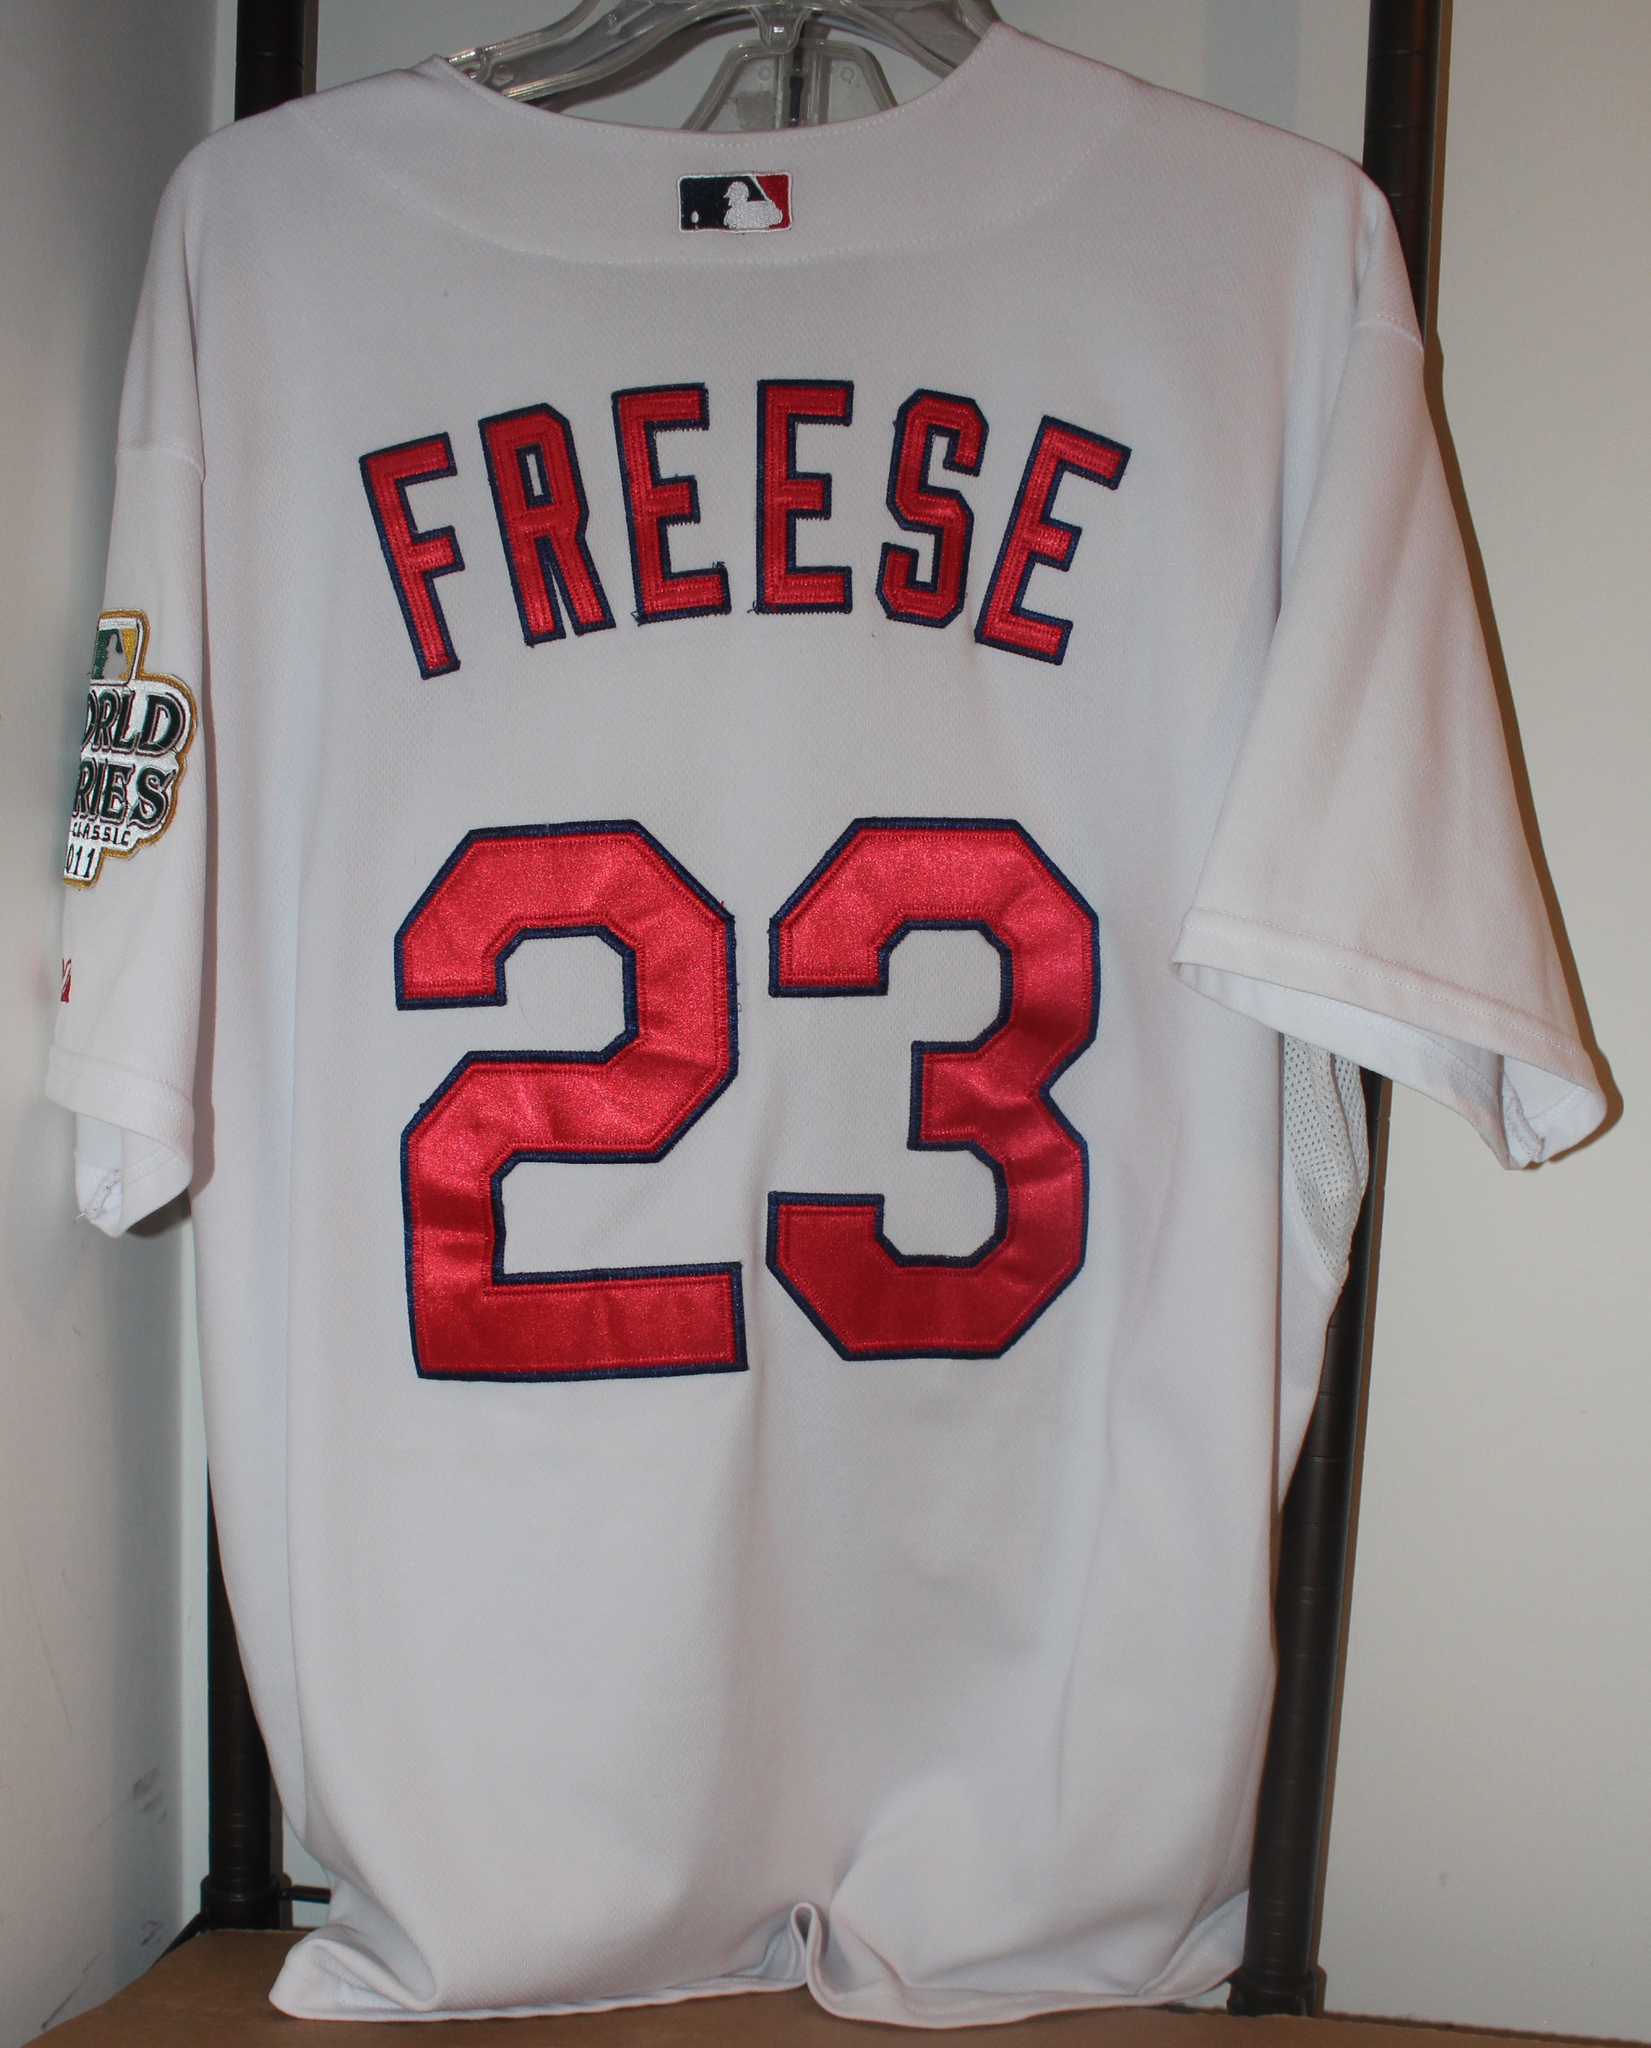 David Freese 2013 St. Louis Cardinals World Series White Home Men's Jersey